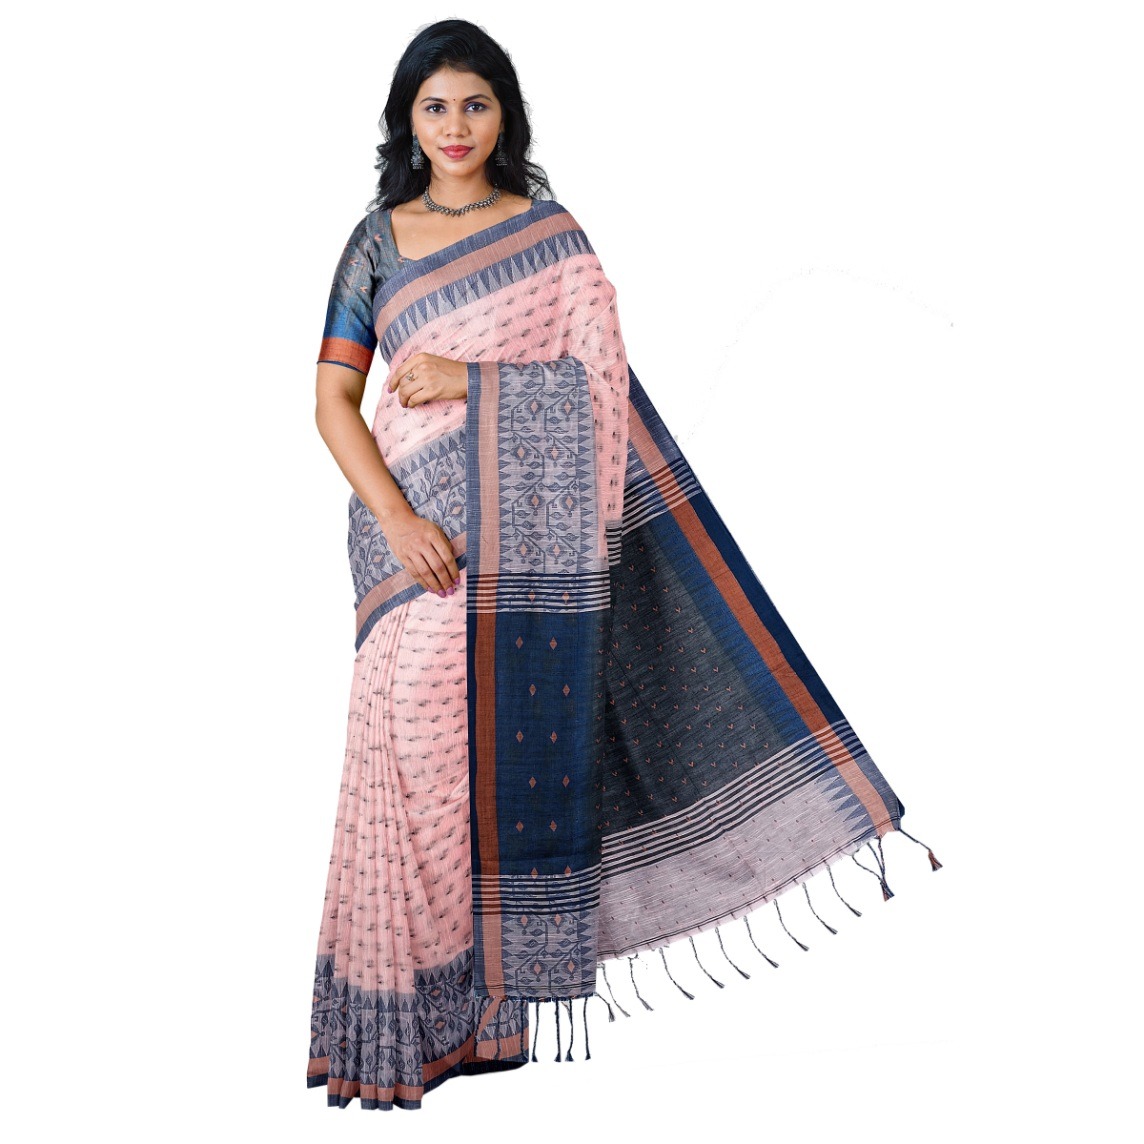 Vandana Handloom Saree (Blue) - Buy Handloom Sarees Online | Craftmart